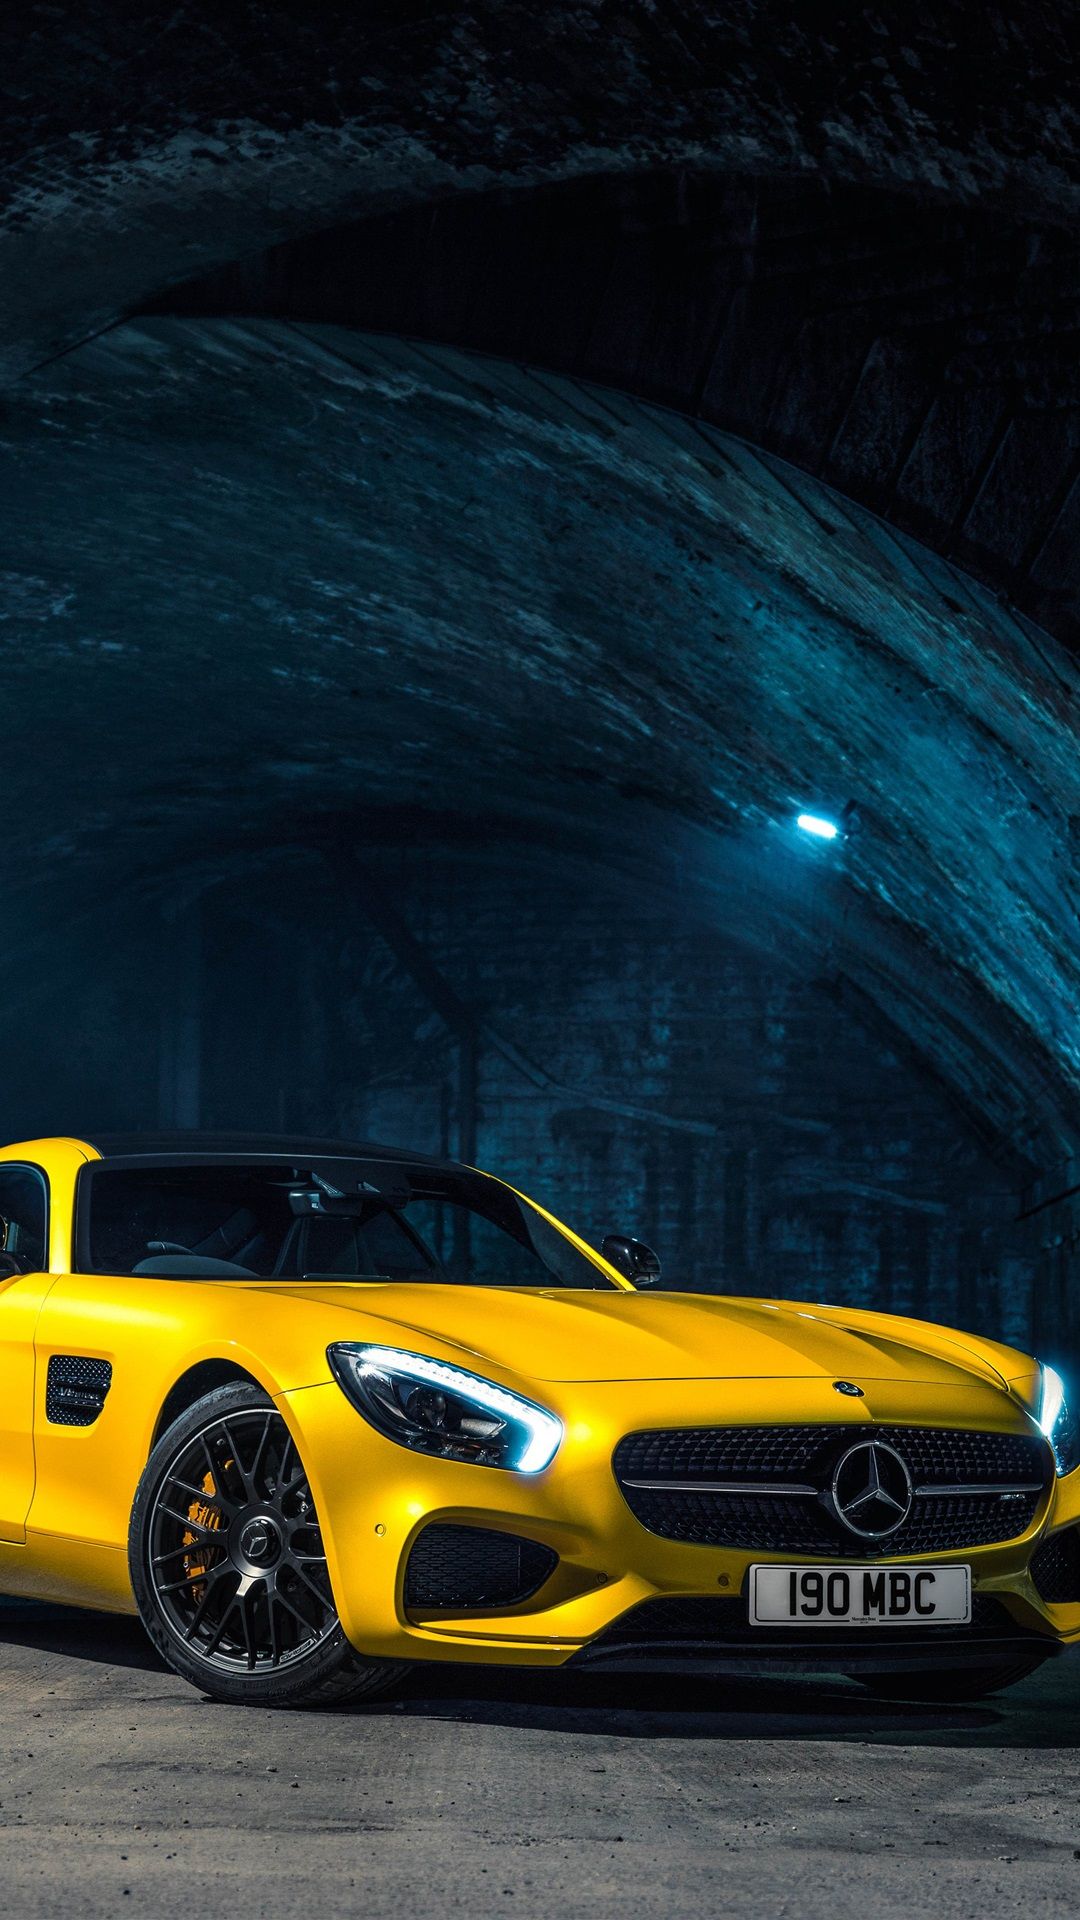 Mercedes Benz AMG GTS Yellow Car .iwall365.com